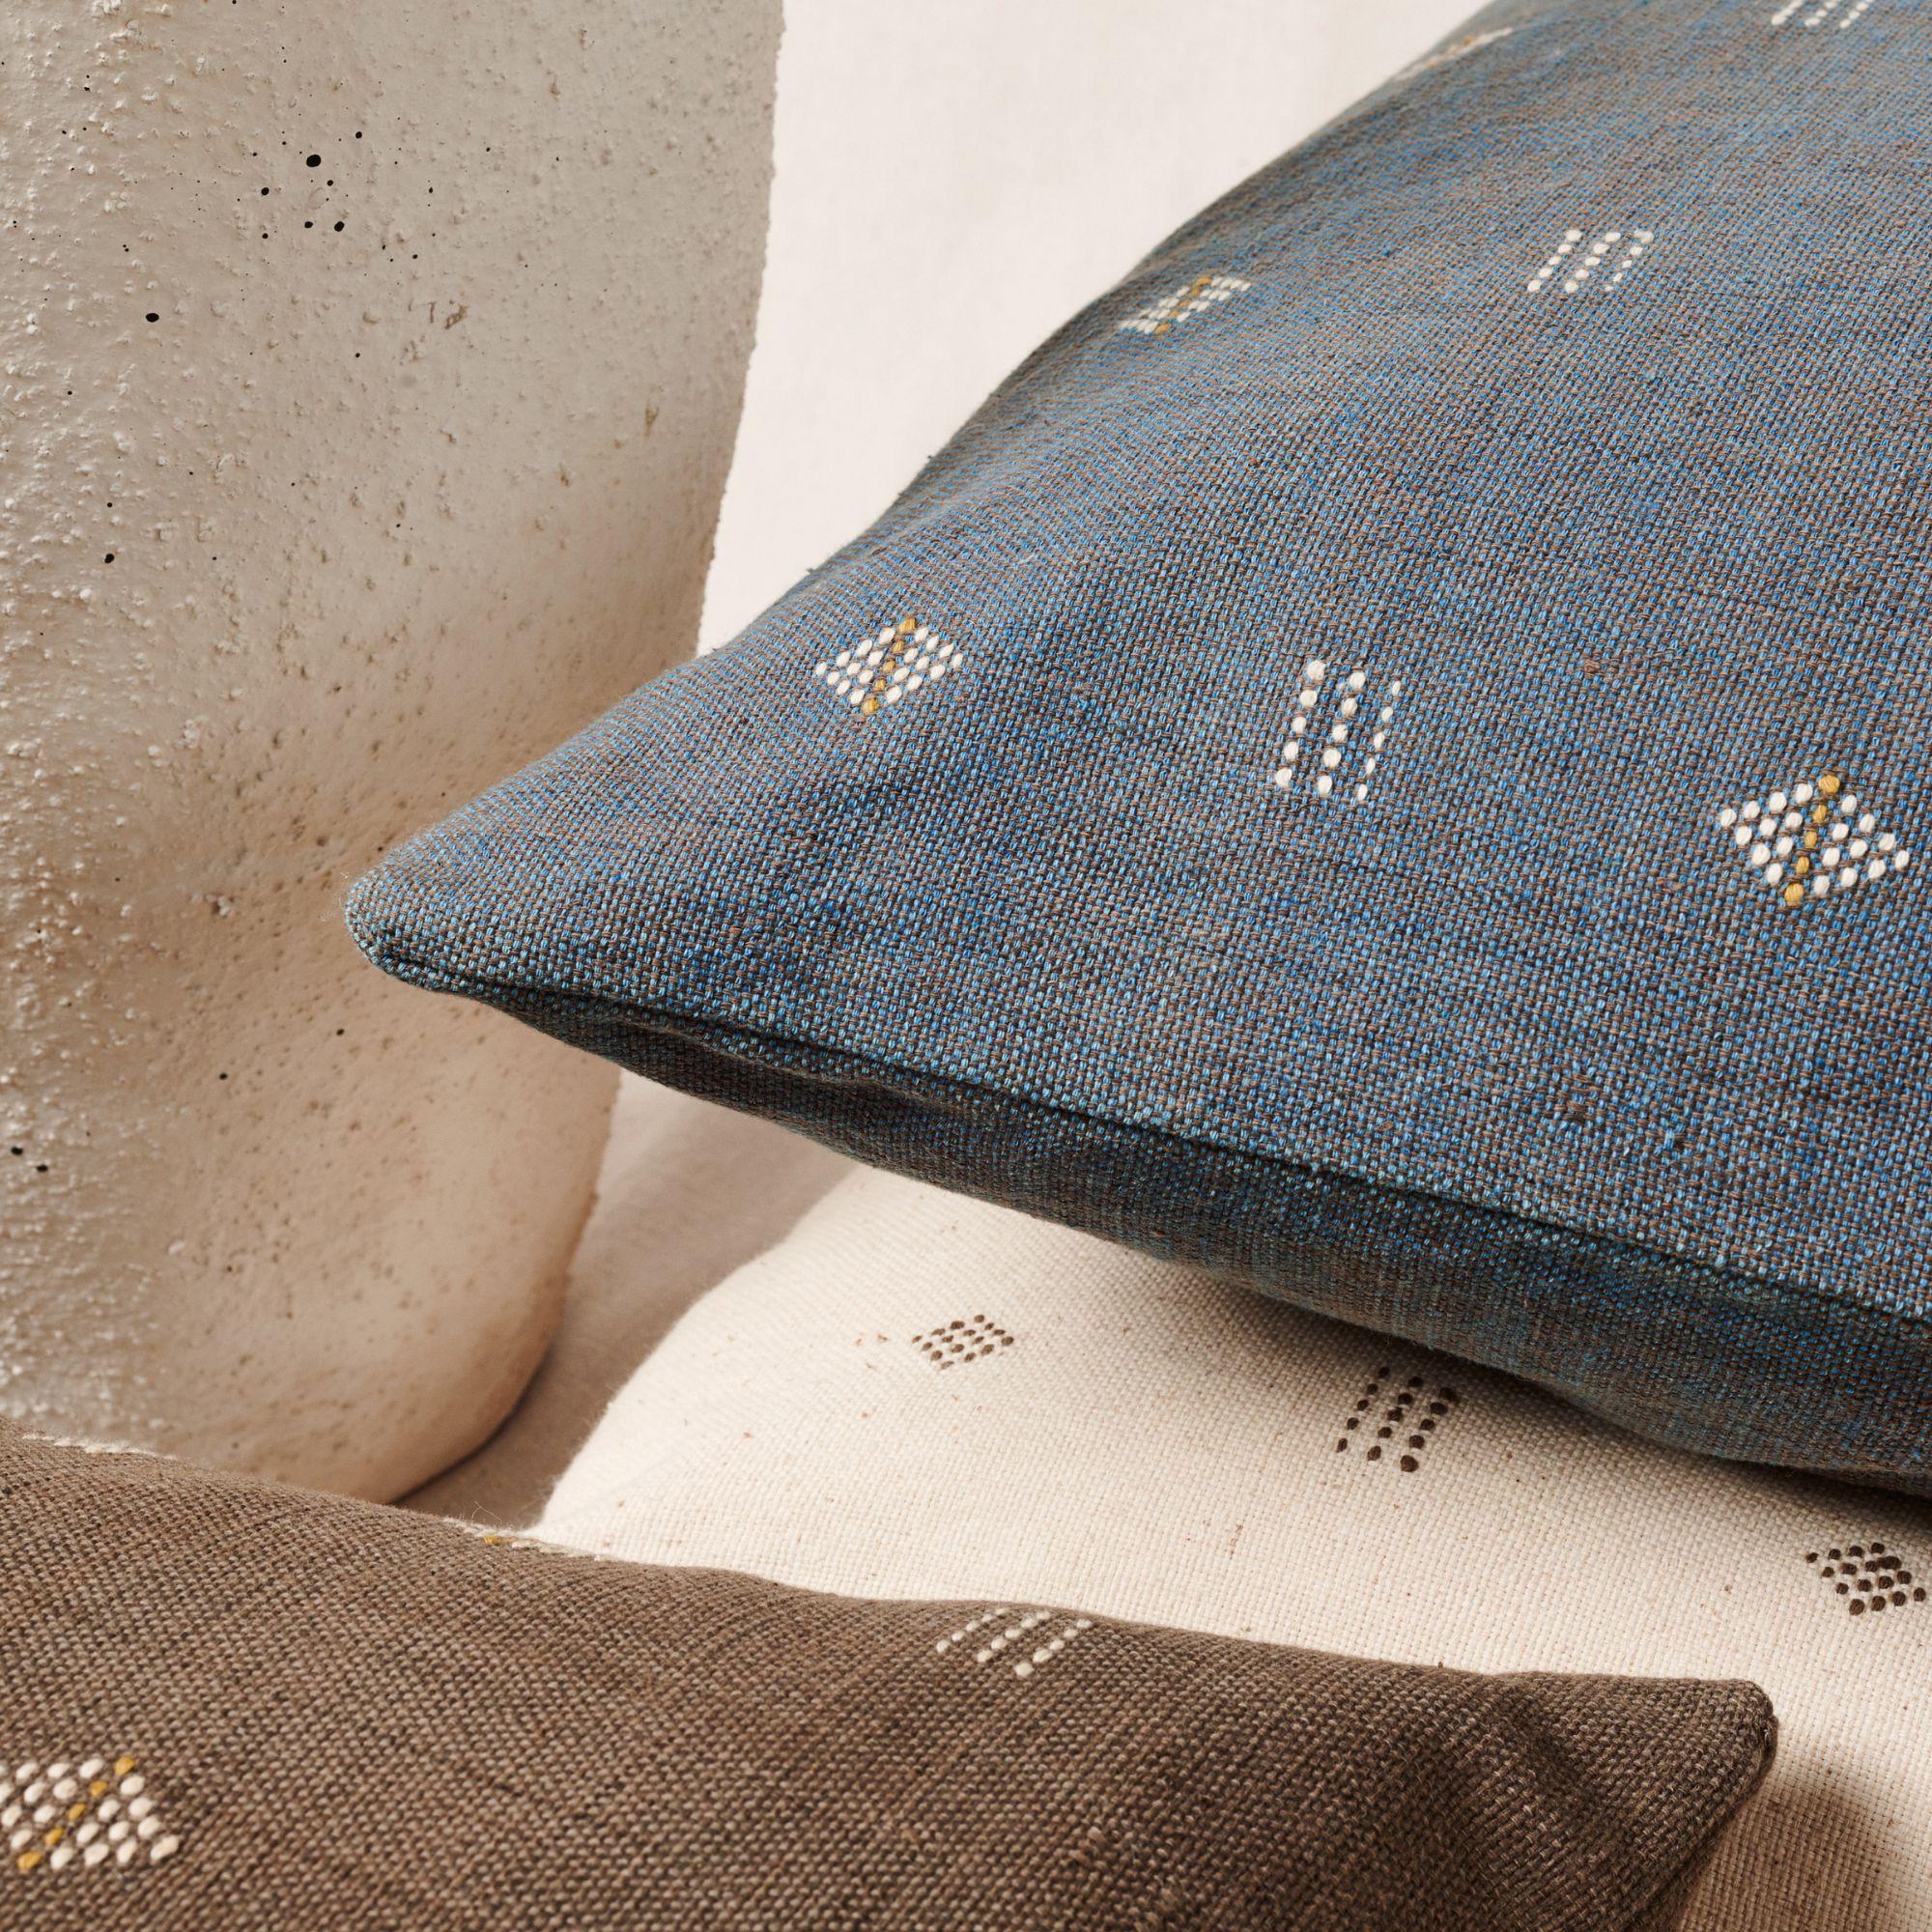 Modern Chokor Nira Indigo Organic Cotton Handloom Pillow in Geometric Patterns For Sale